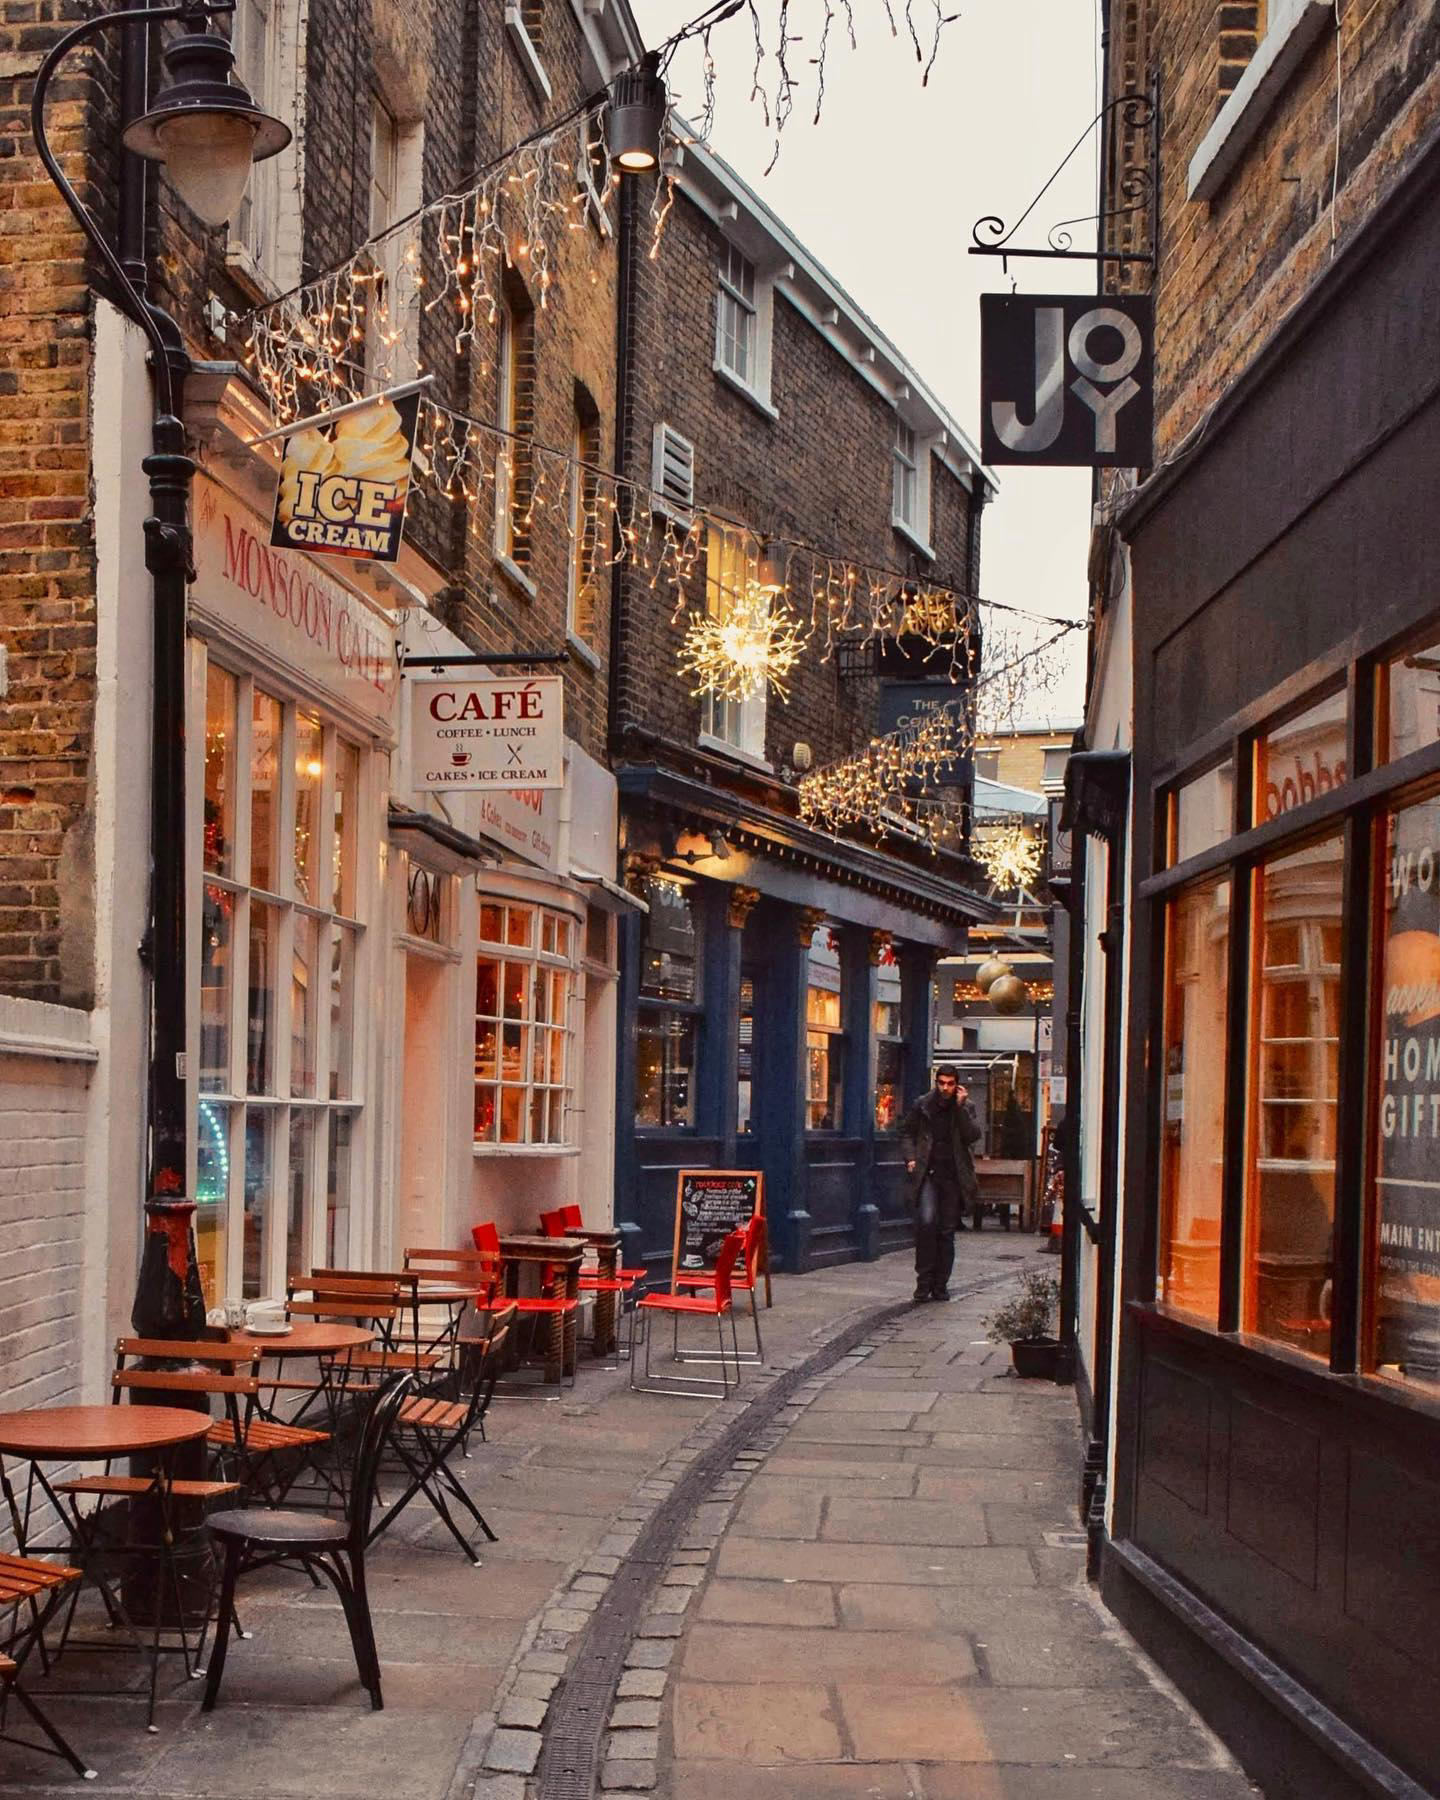 VISIT LONDON - We love exploring Greenwich Market